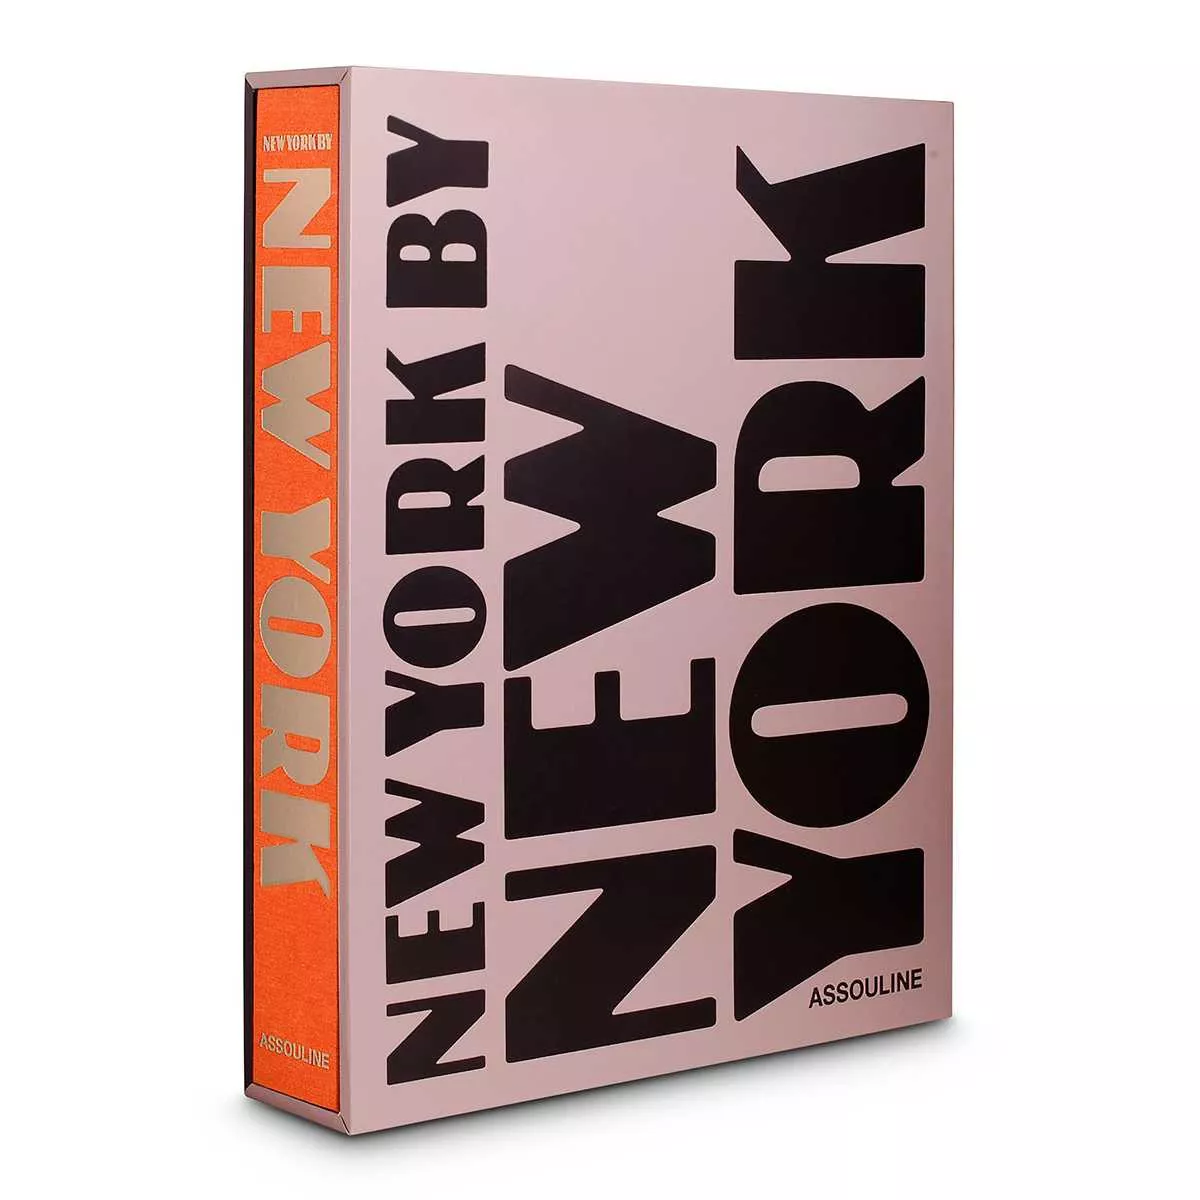 Книга "New York by New York" Assouline Collection (9781614286844) - Фото nav 2